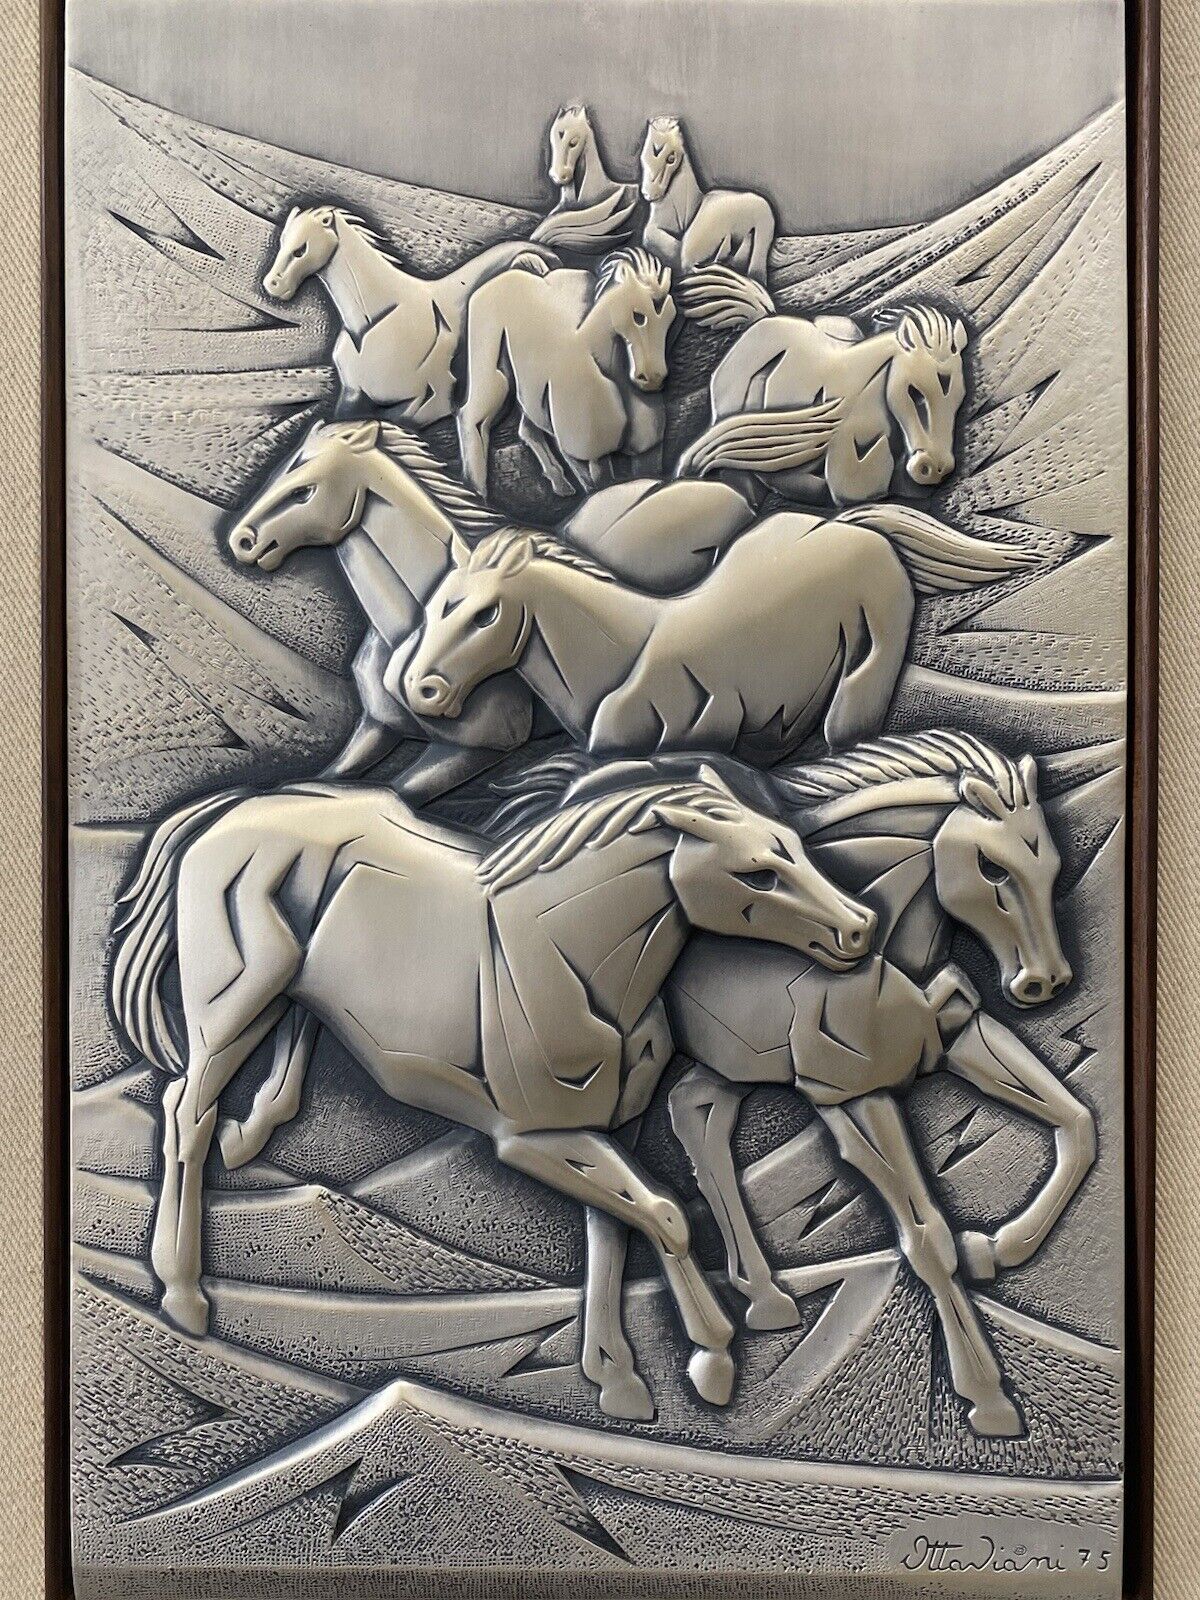 🔥 Vintage Italian Modern Cubist Horse Silver Sculpture Plaque, Ottaviani 1975